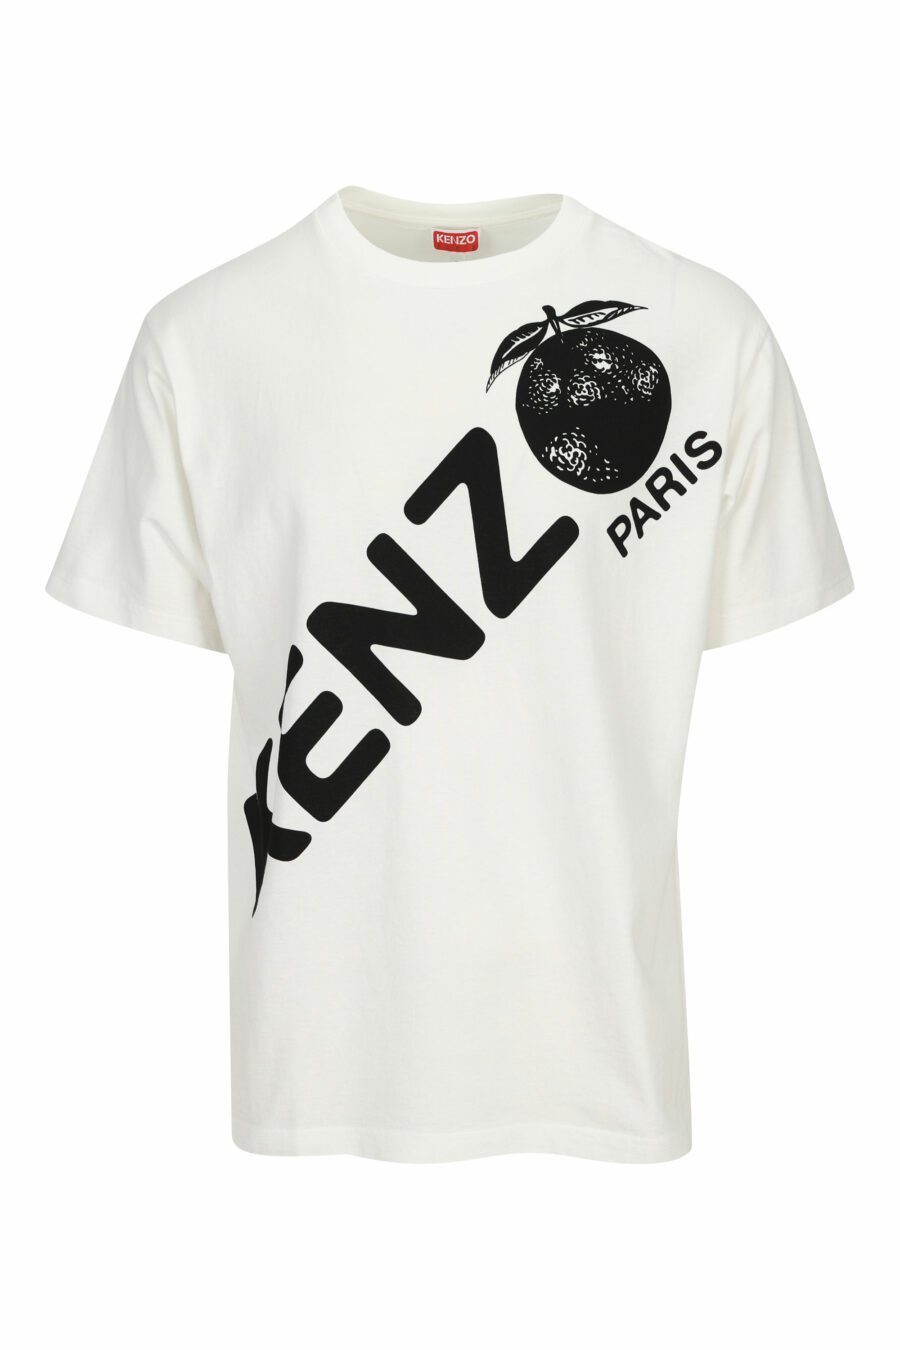 T-shirt blanc avec maxilogo diagonal "kenzo orange" - 3612230627000